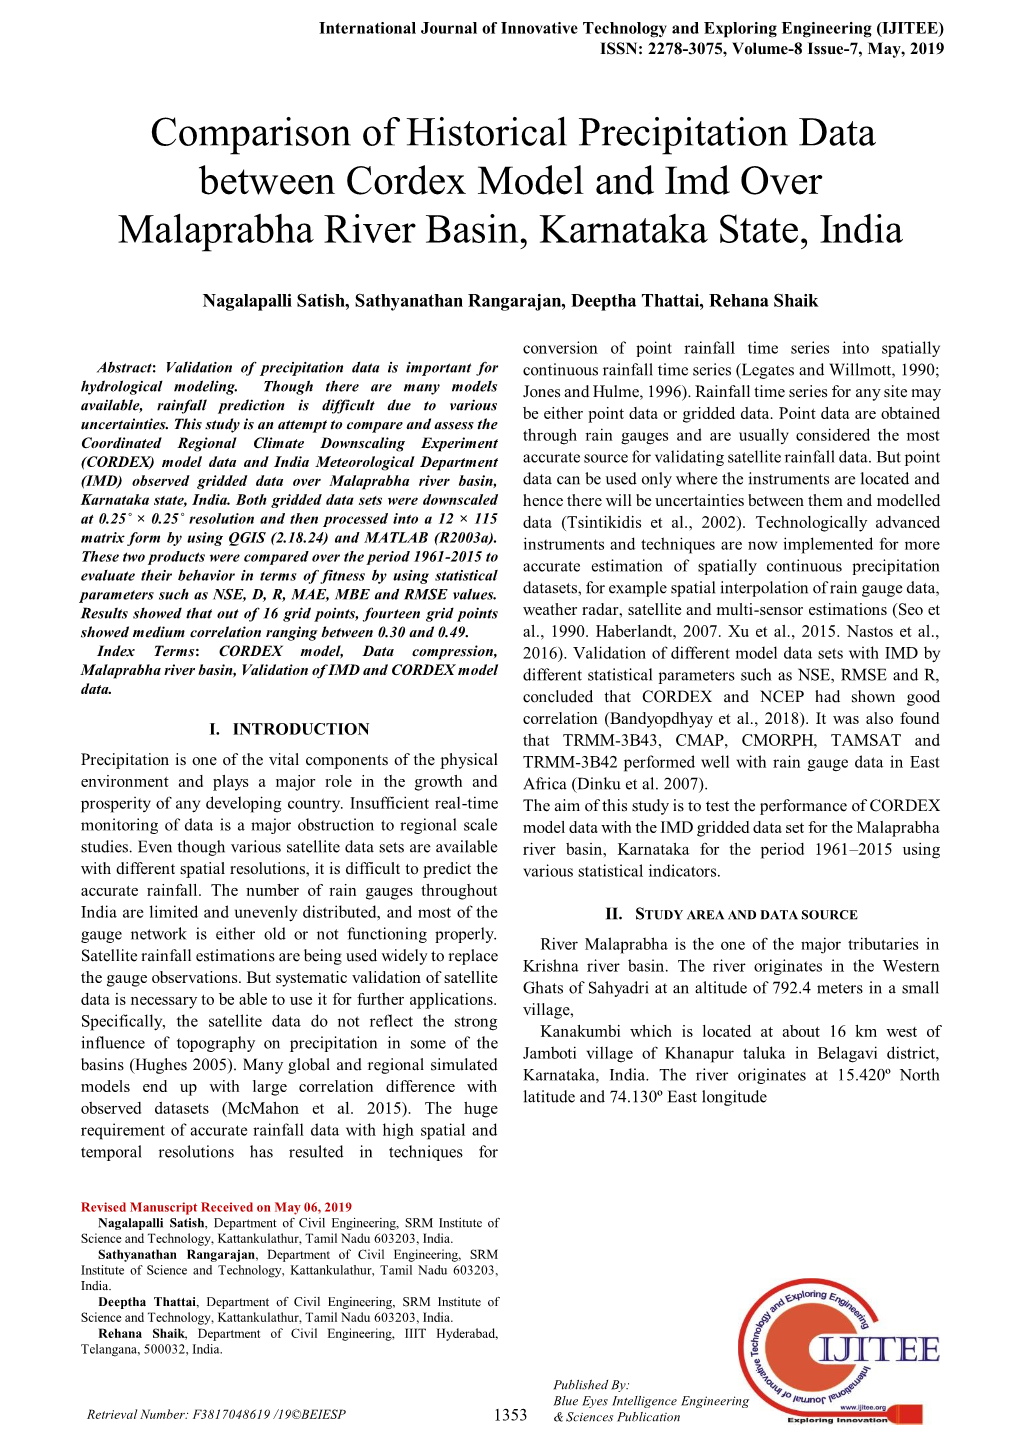 Comparison of Historical Precipitation Data Between Cordex Model and Imd Over Malaprabha River Basin, Karnataka State, India